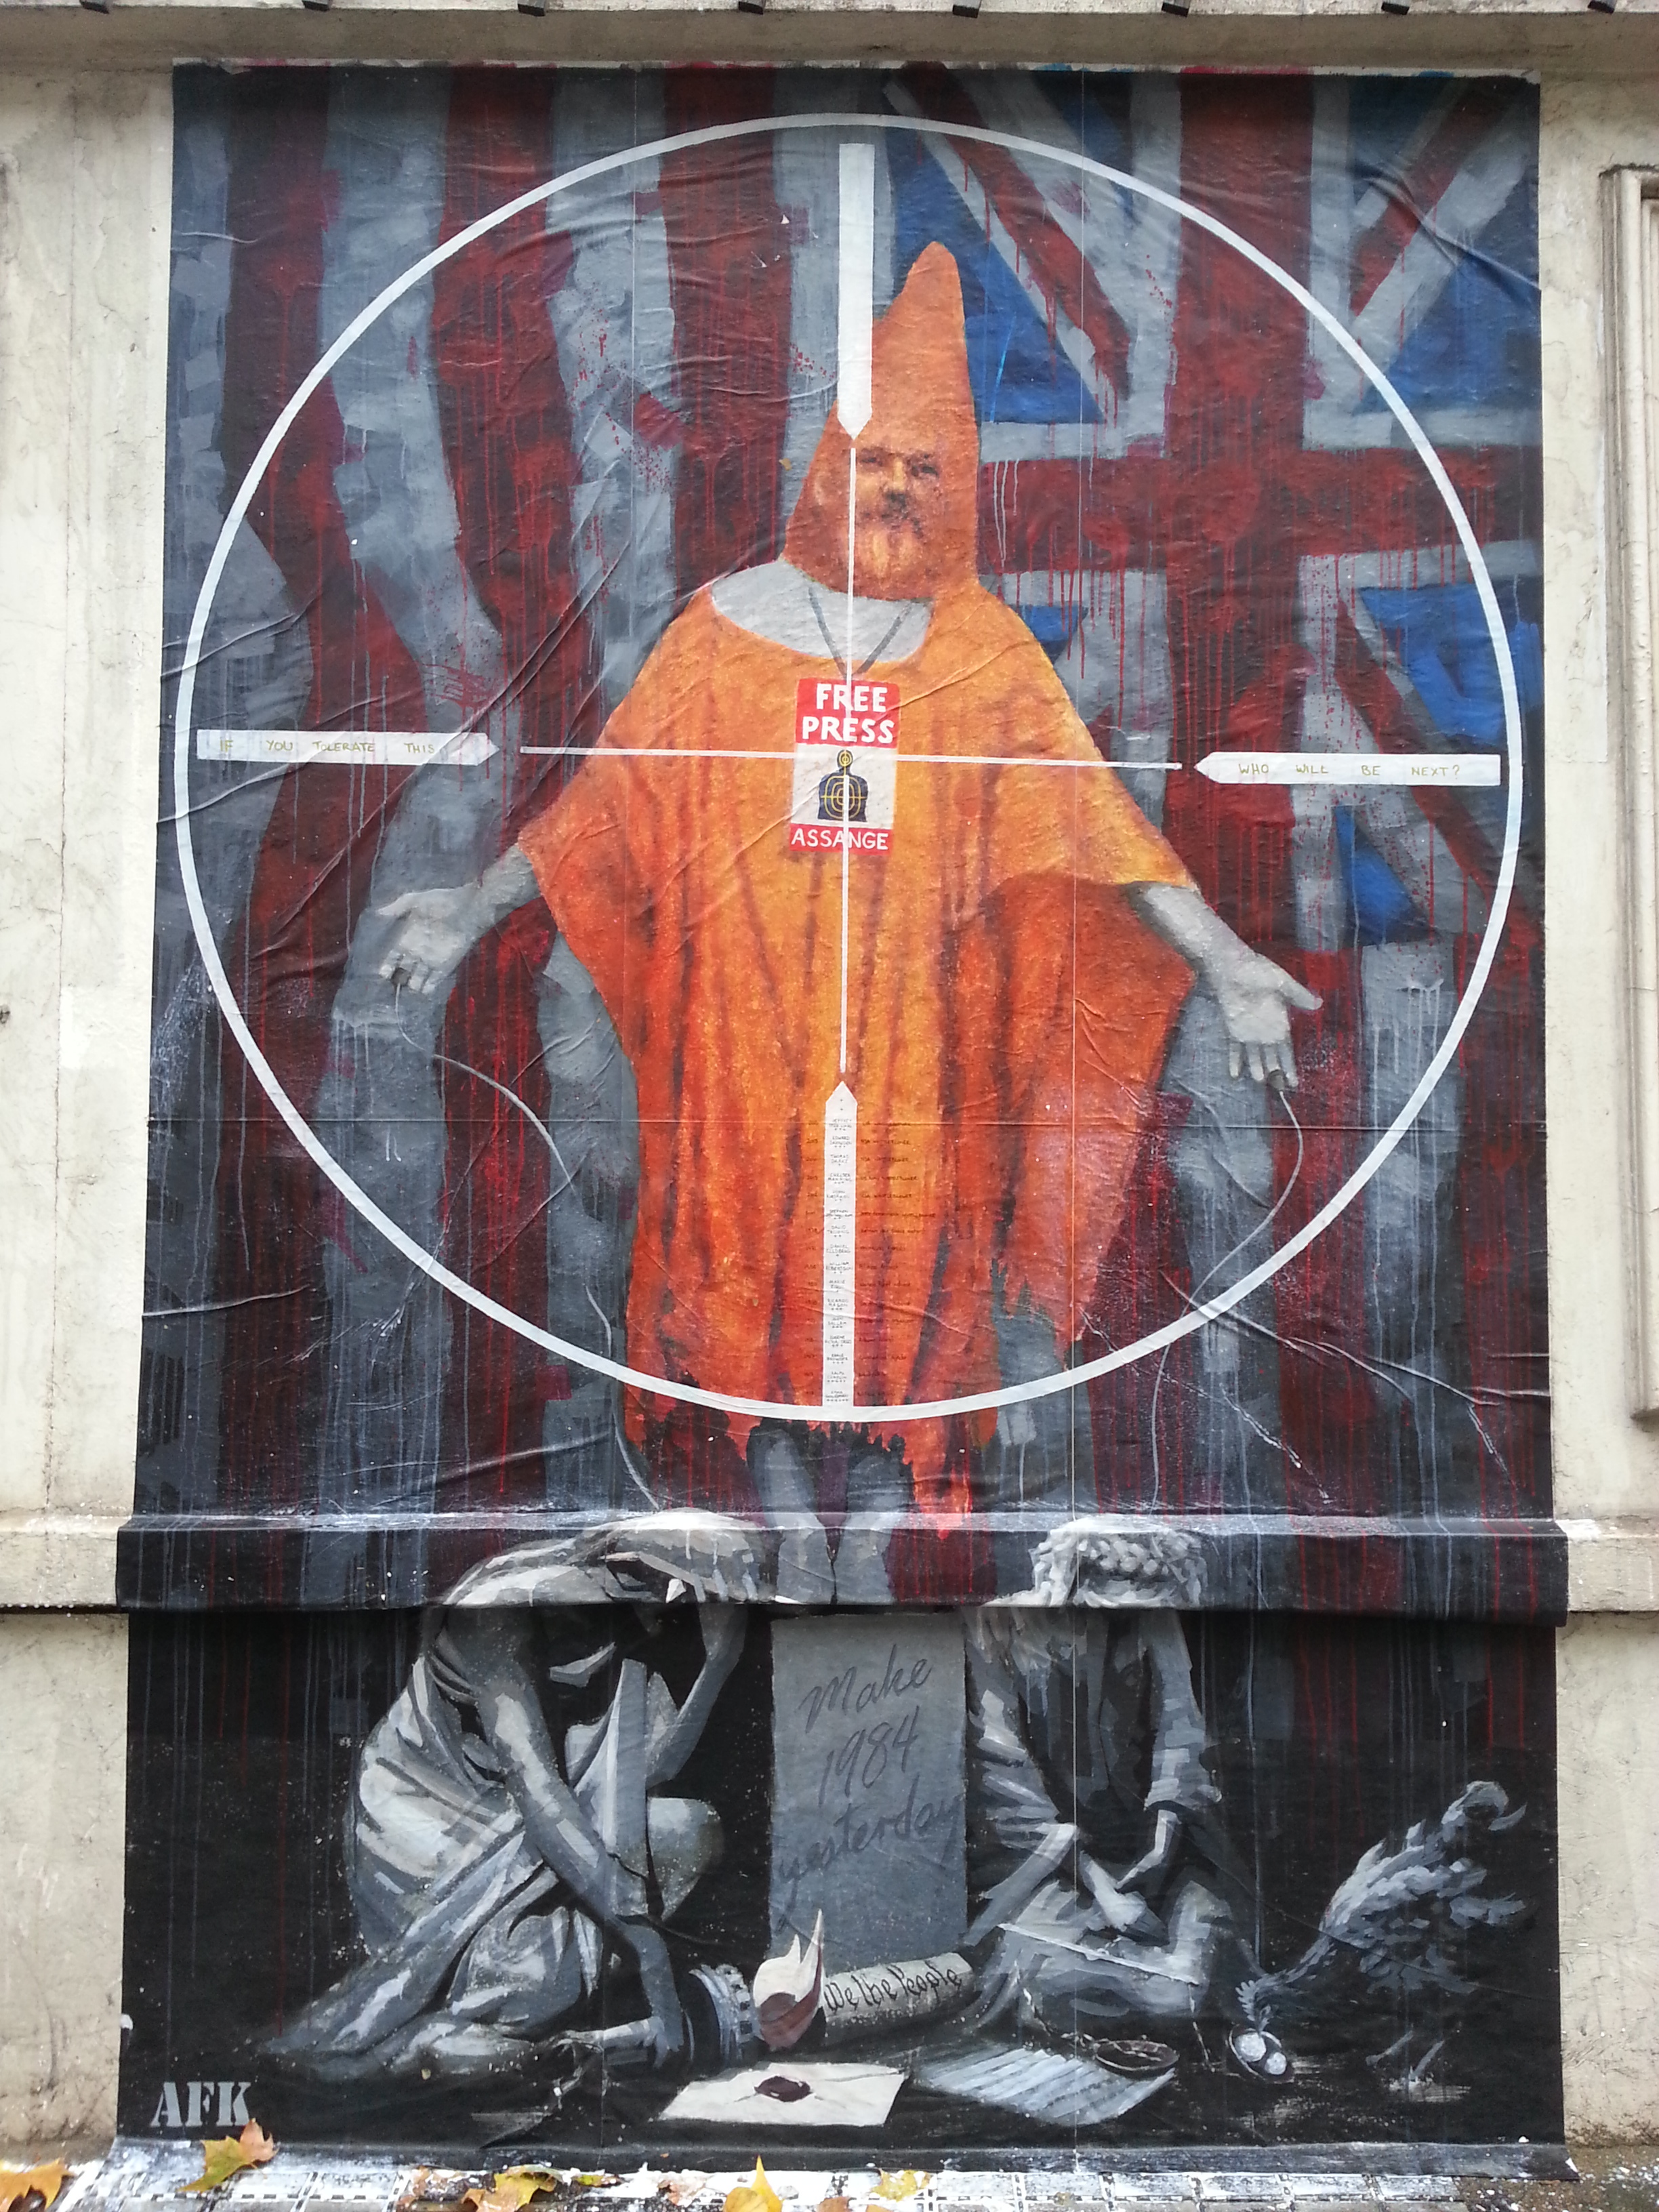 Persecution - AFK (Norwegian street artist)